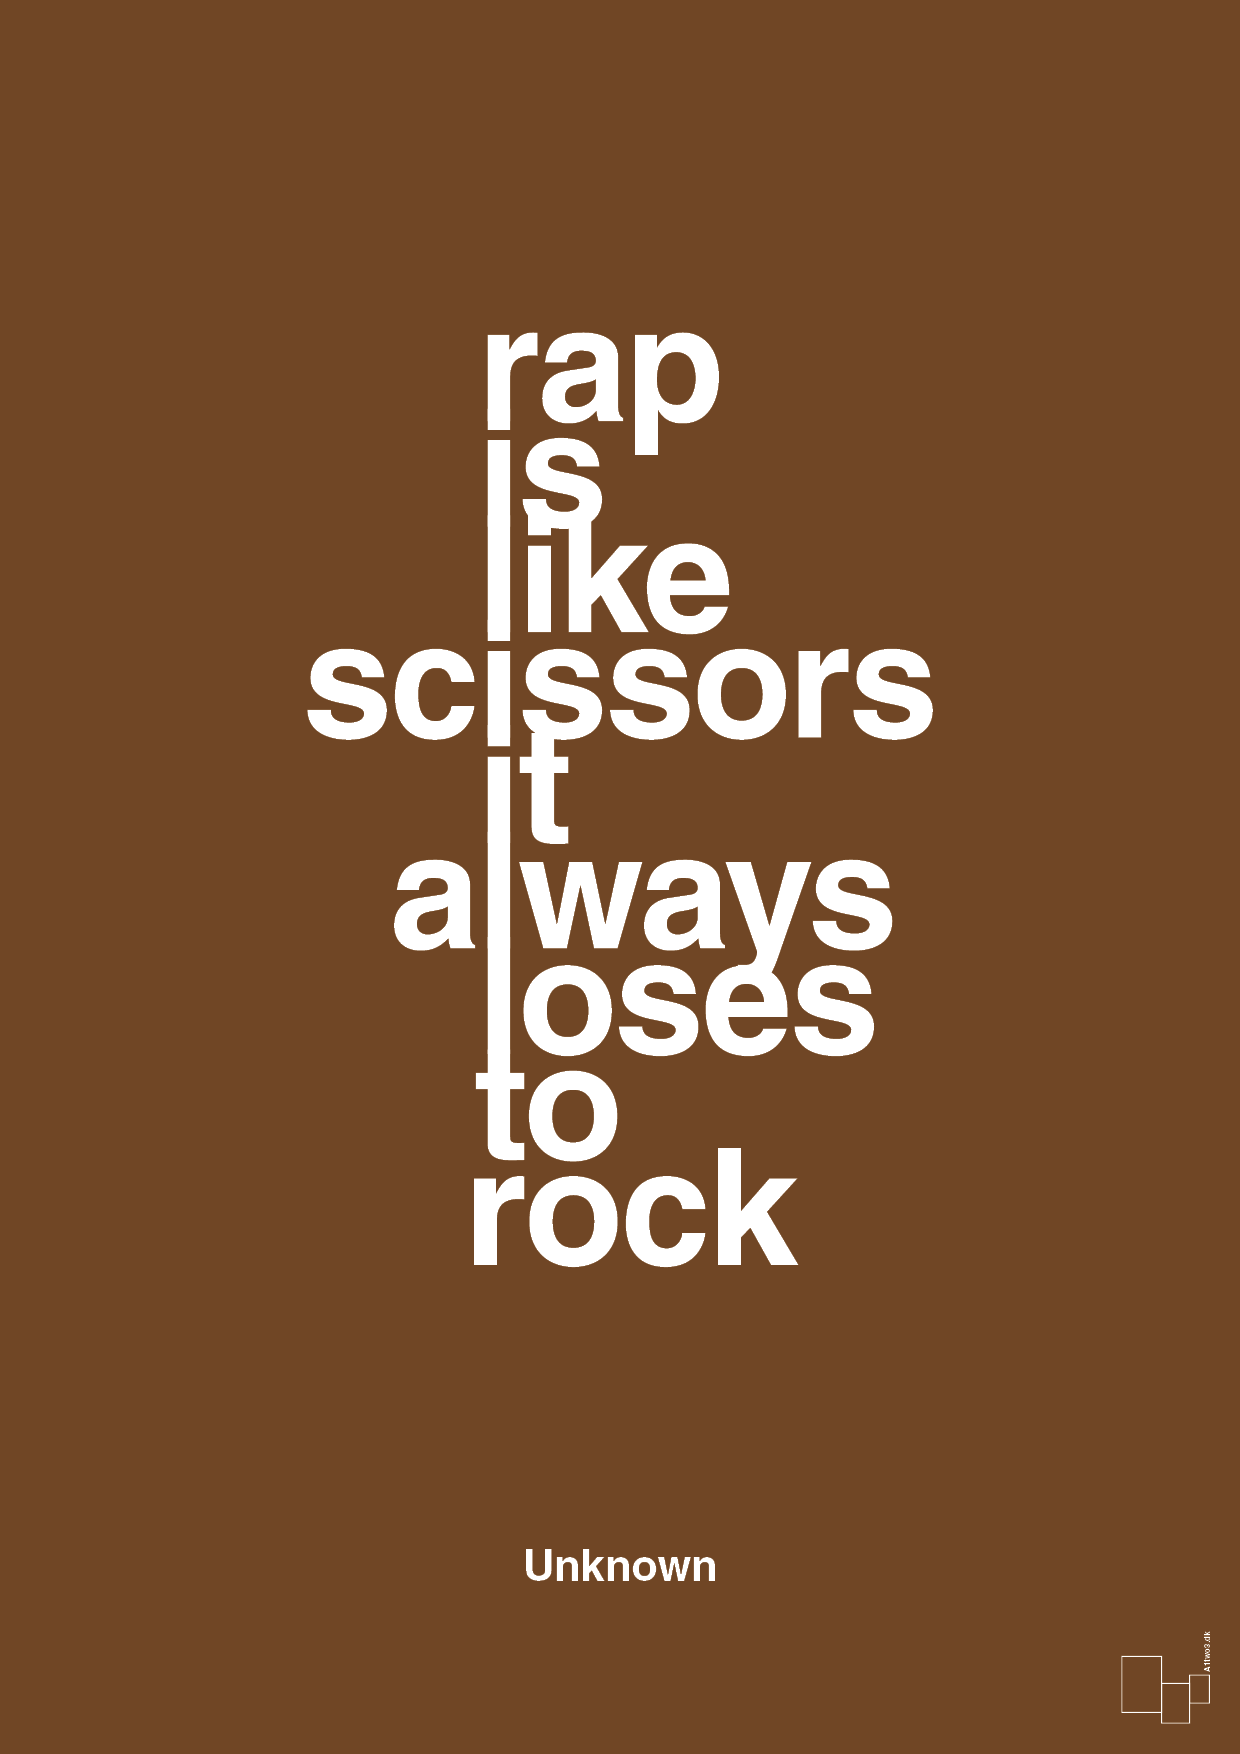 rap is like scissors it always loses to rock - Plakat med Citater i Dark Brown